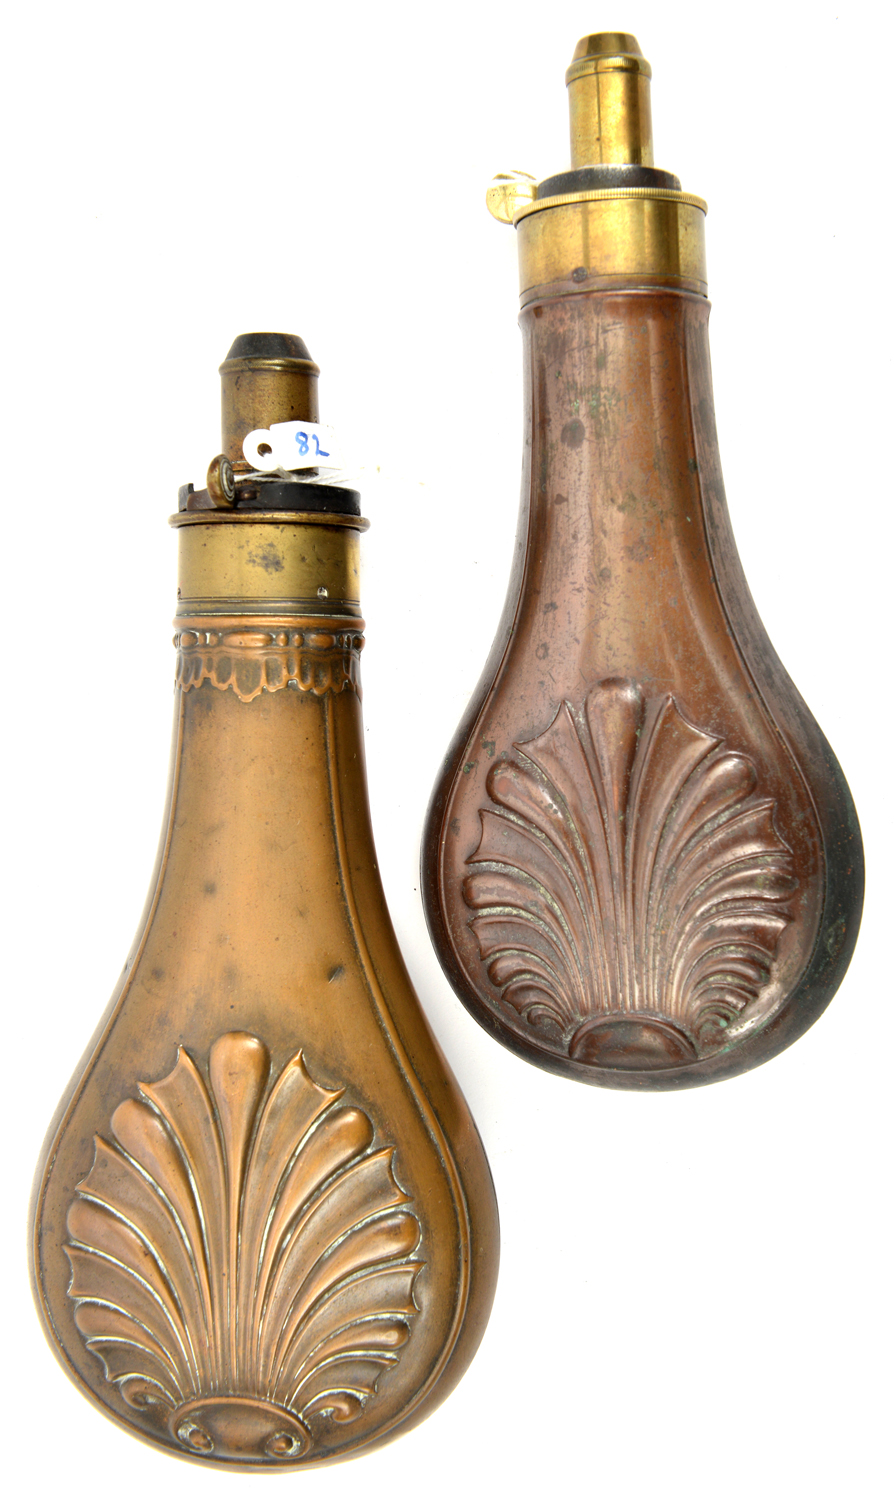 A copper gun size powder flask “Shell & Bush” (Riling 388 without rings), brass top marked “G & JW